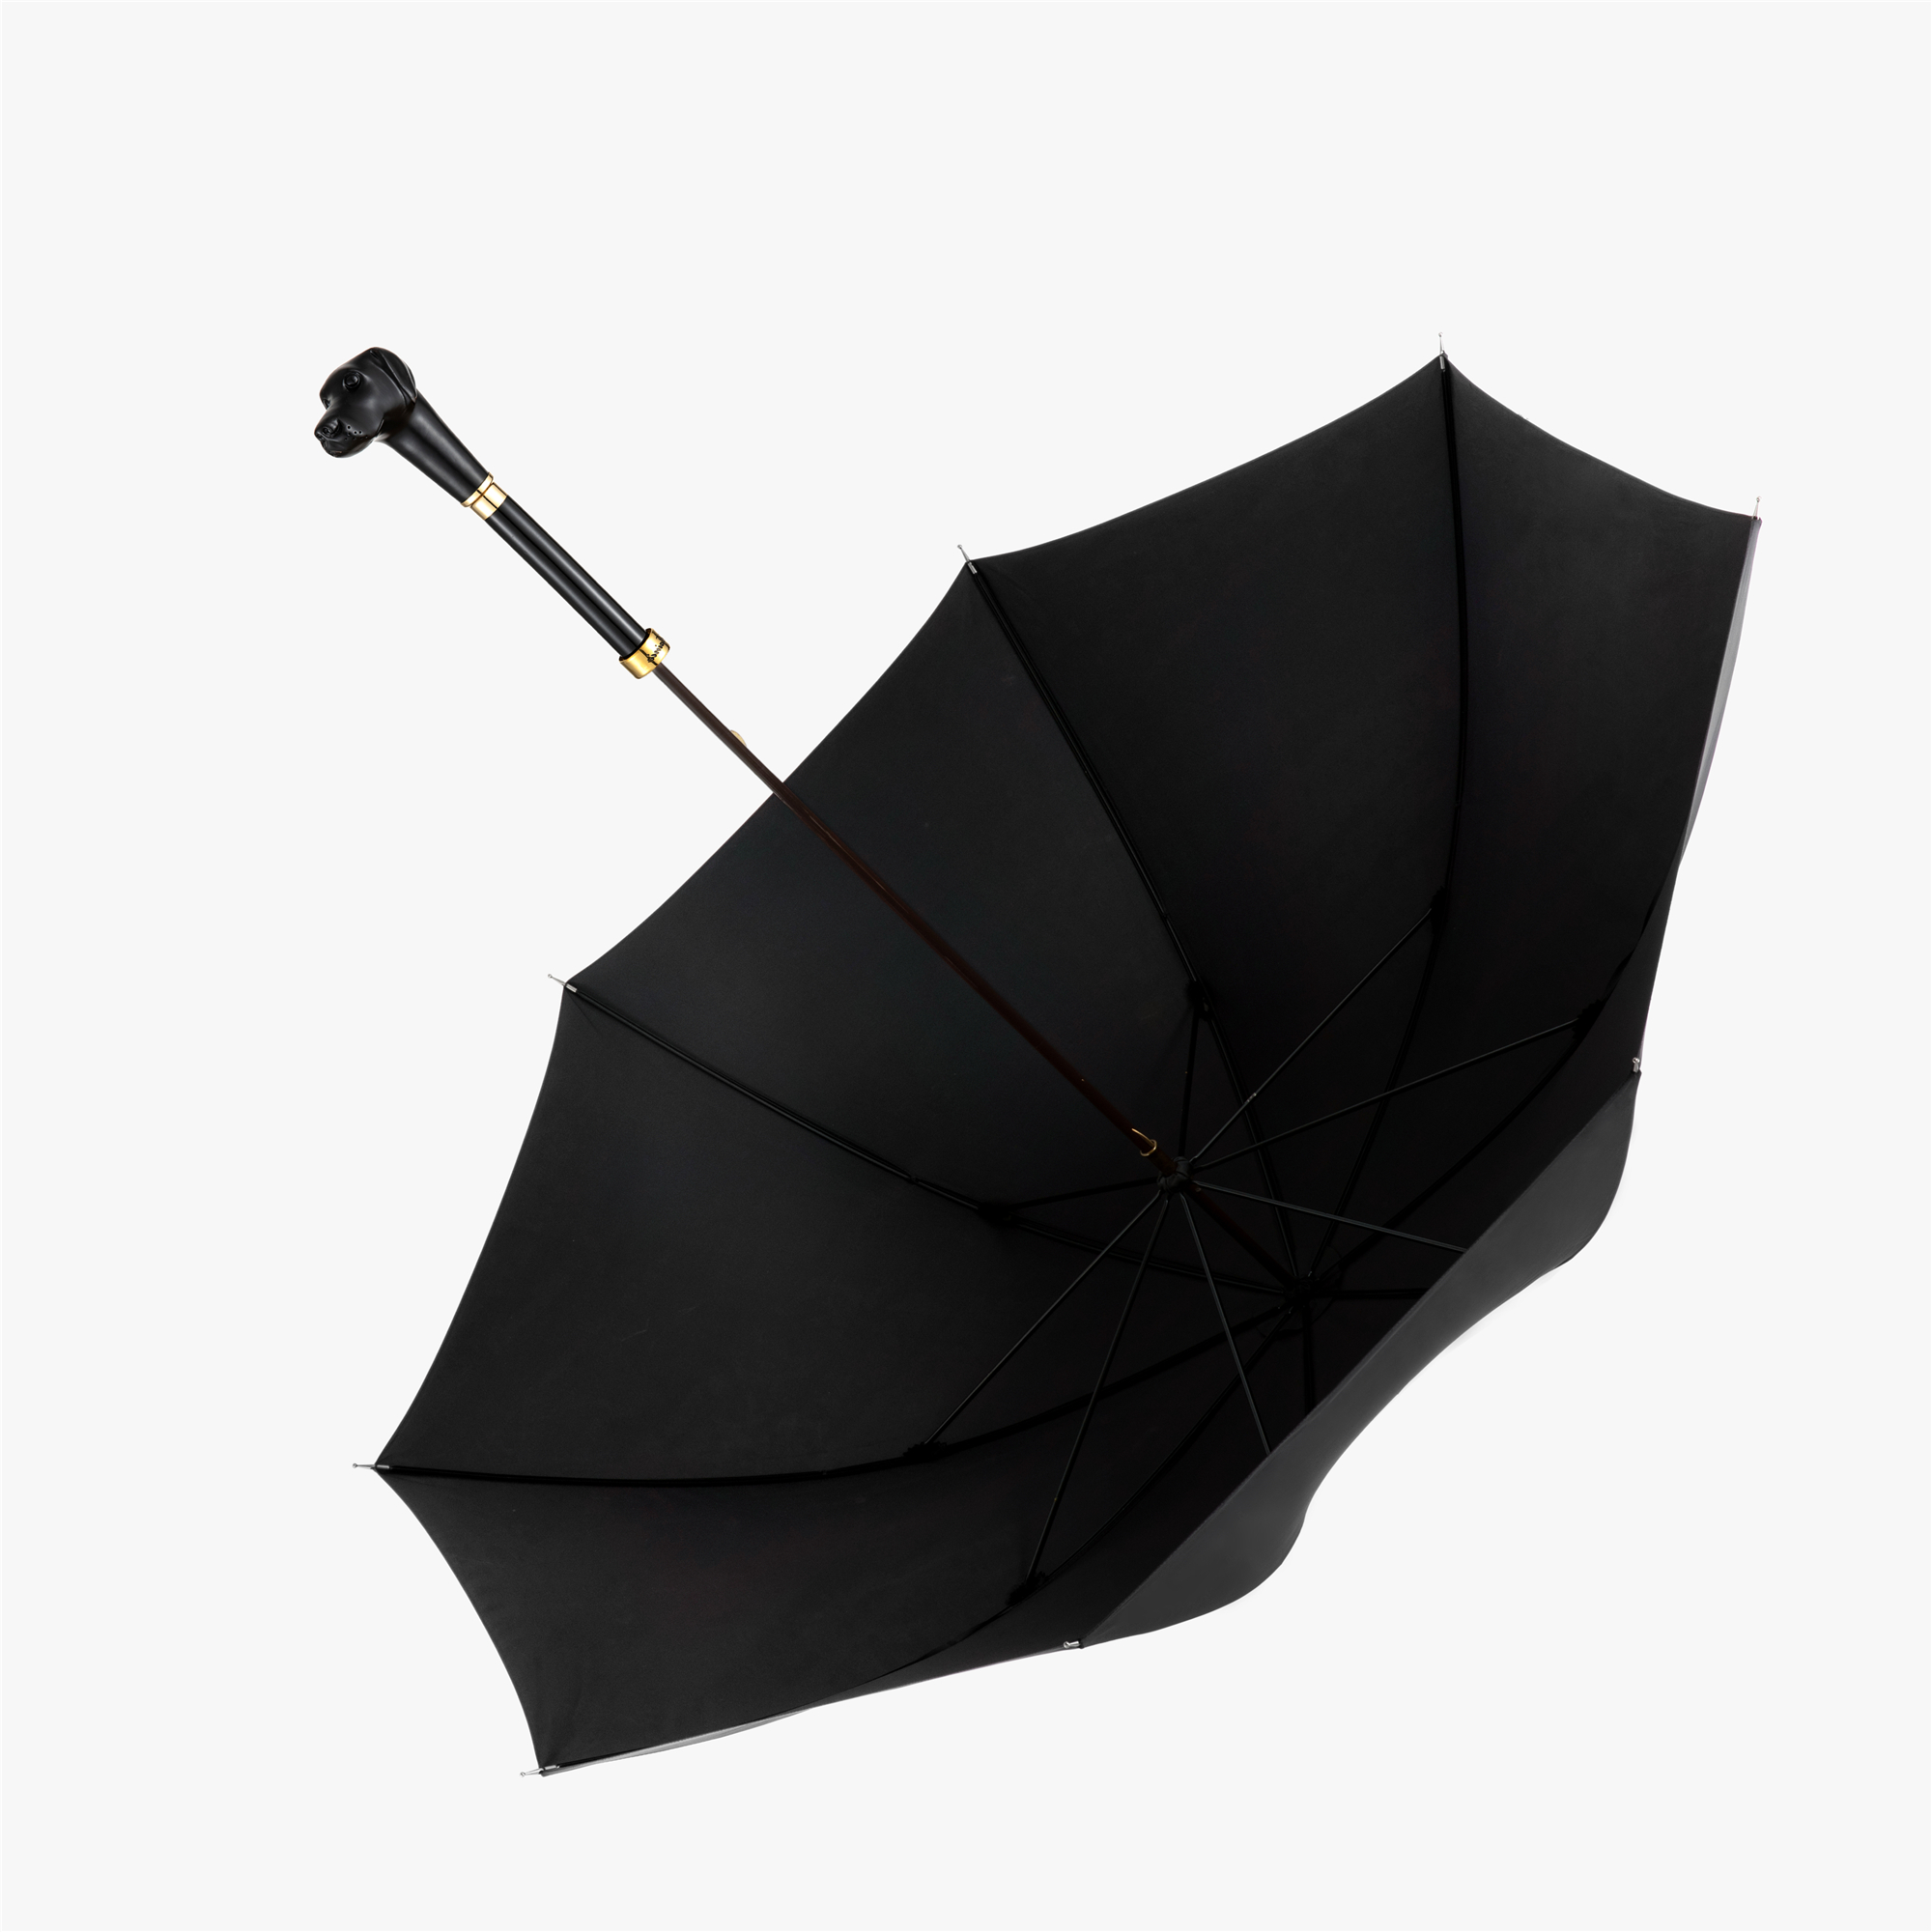 Schnauzer umbrella with straight handle